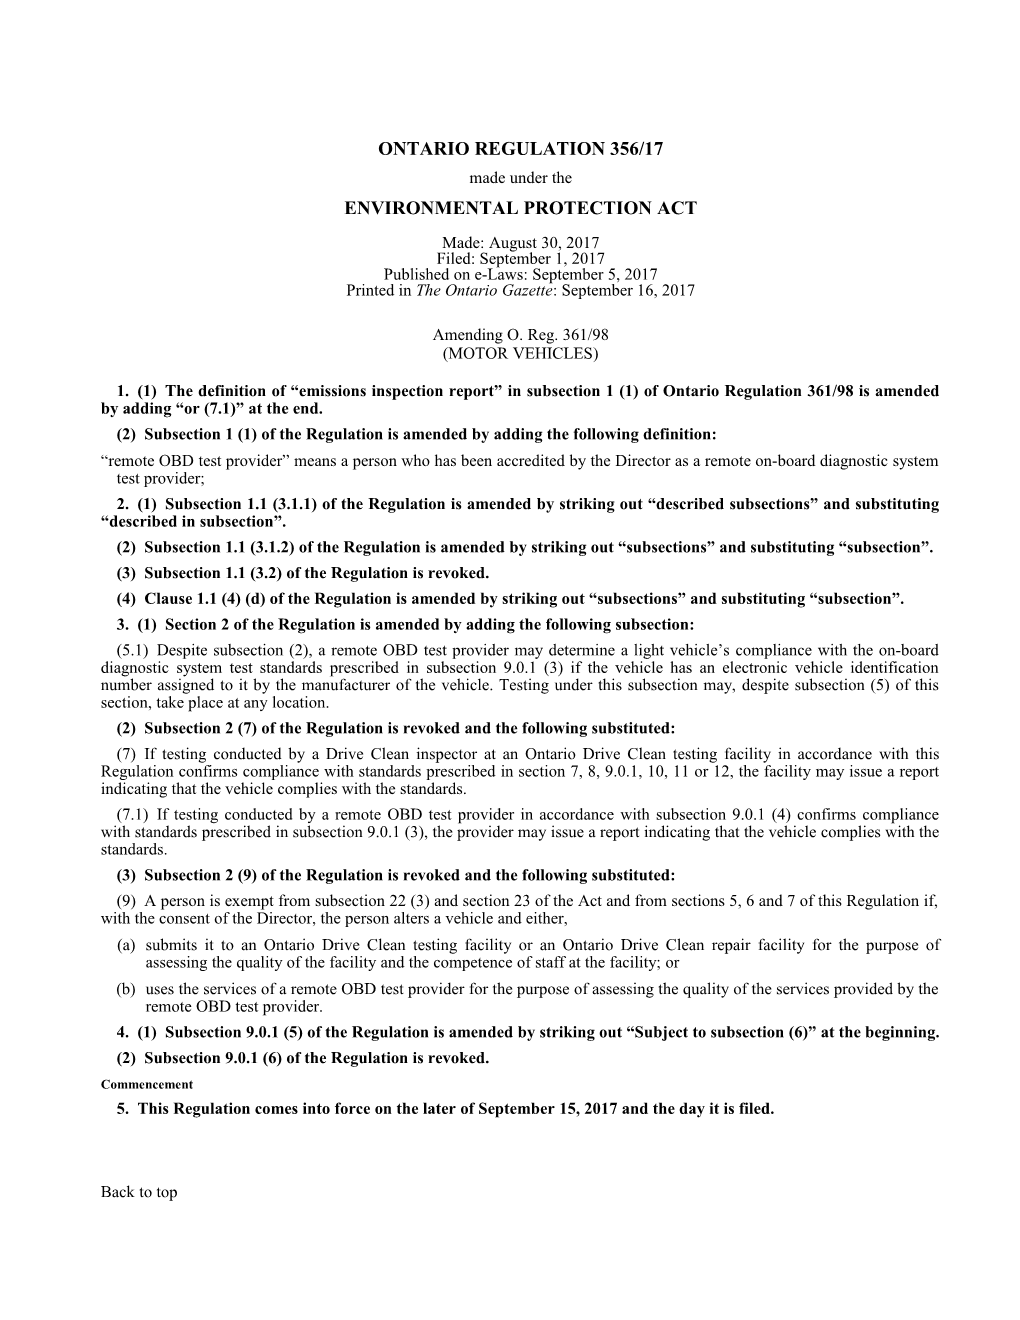 ENVIRONMENTAL PROTECTION ACT - O. Reg. 356/17